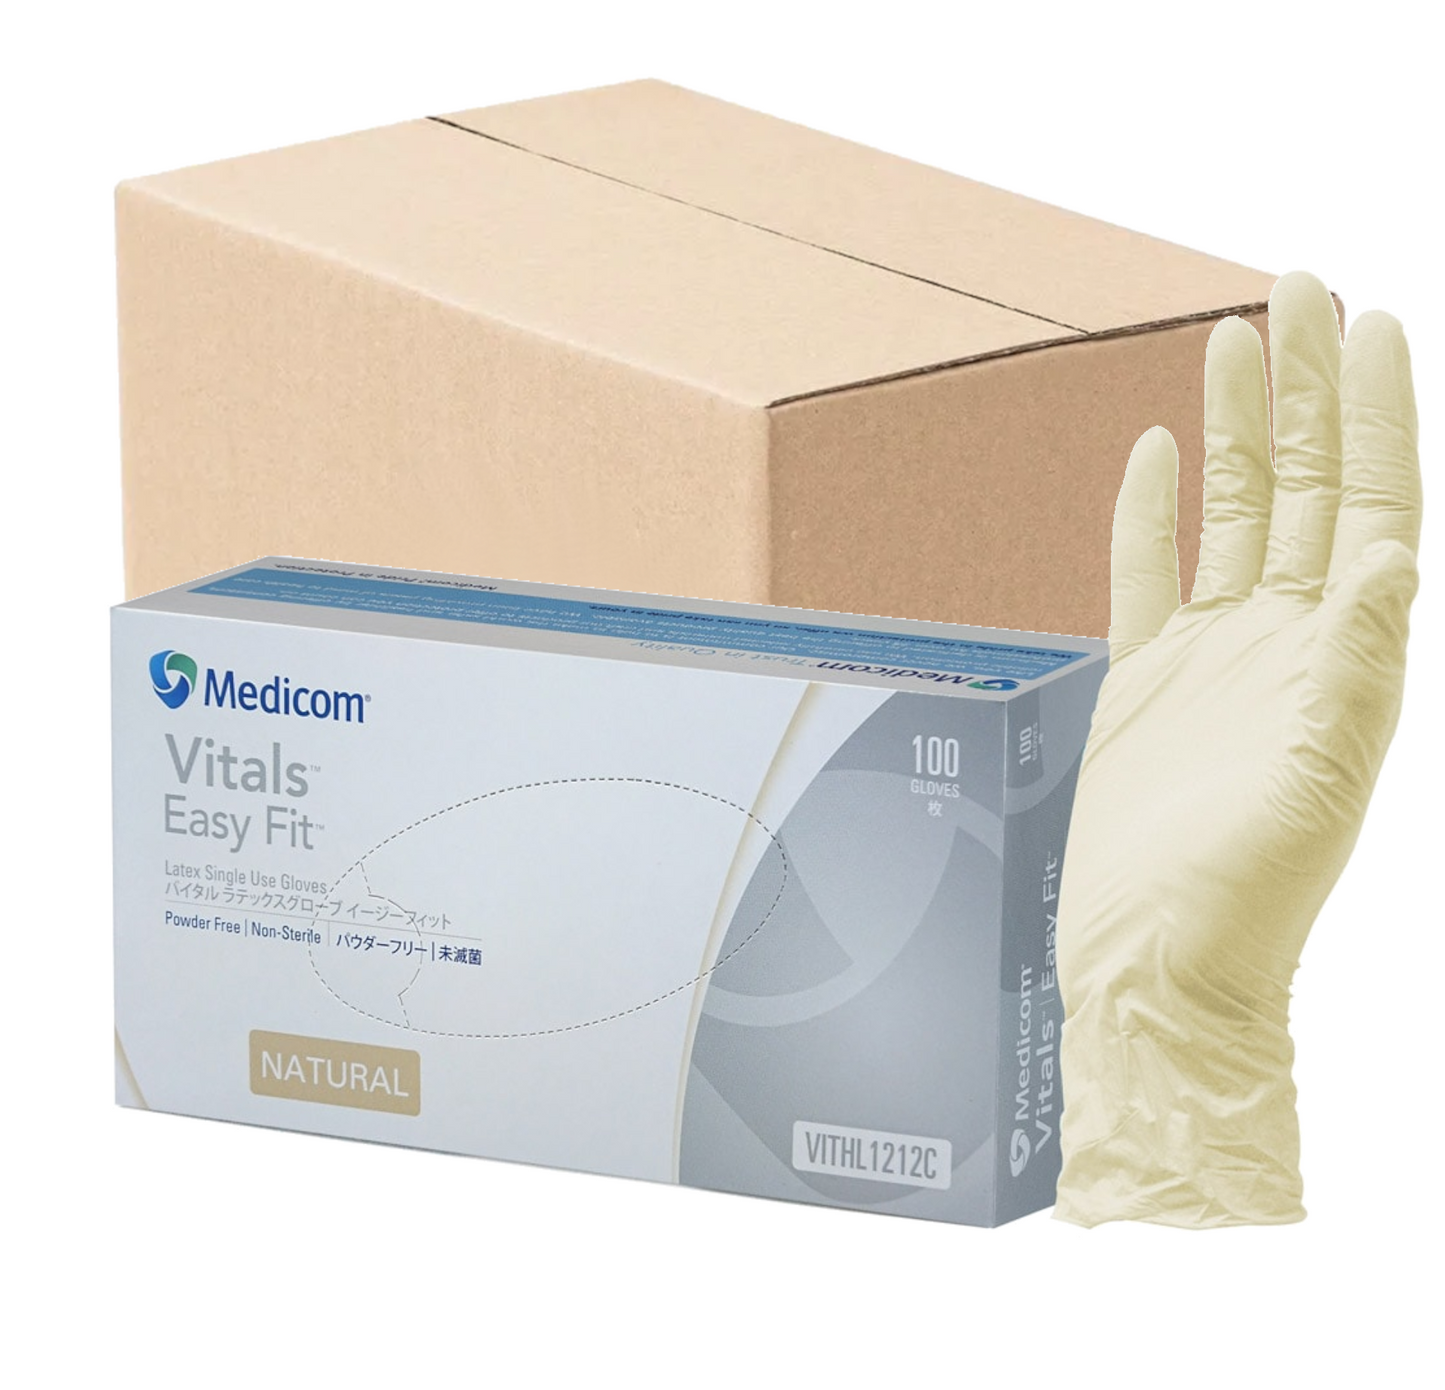 Vitals Simple Fit Latex Powder Free Gloves